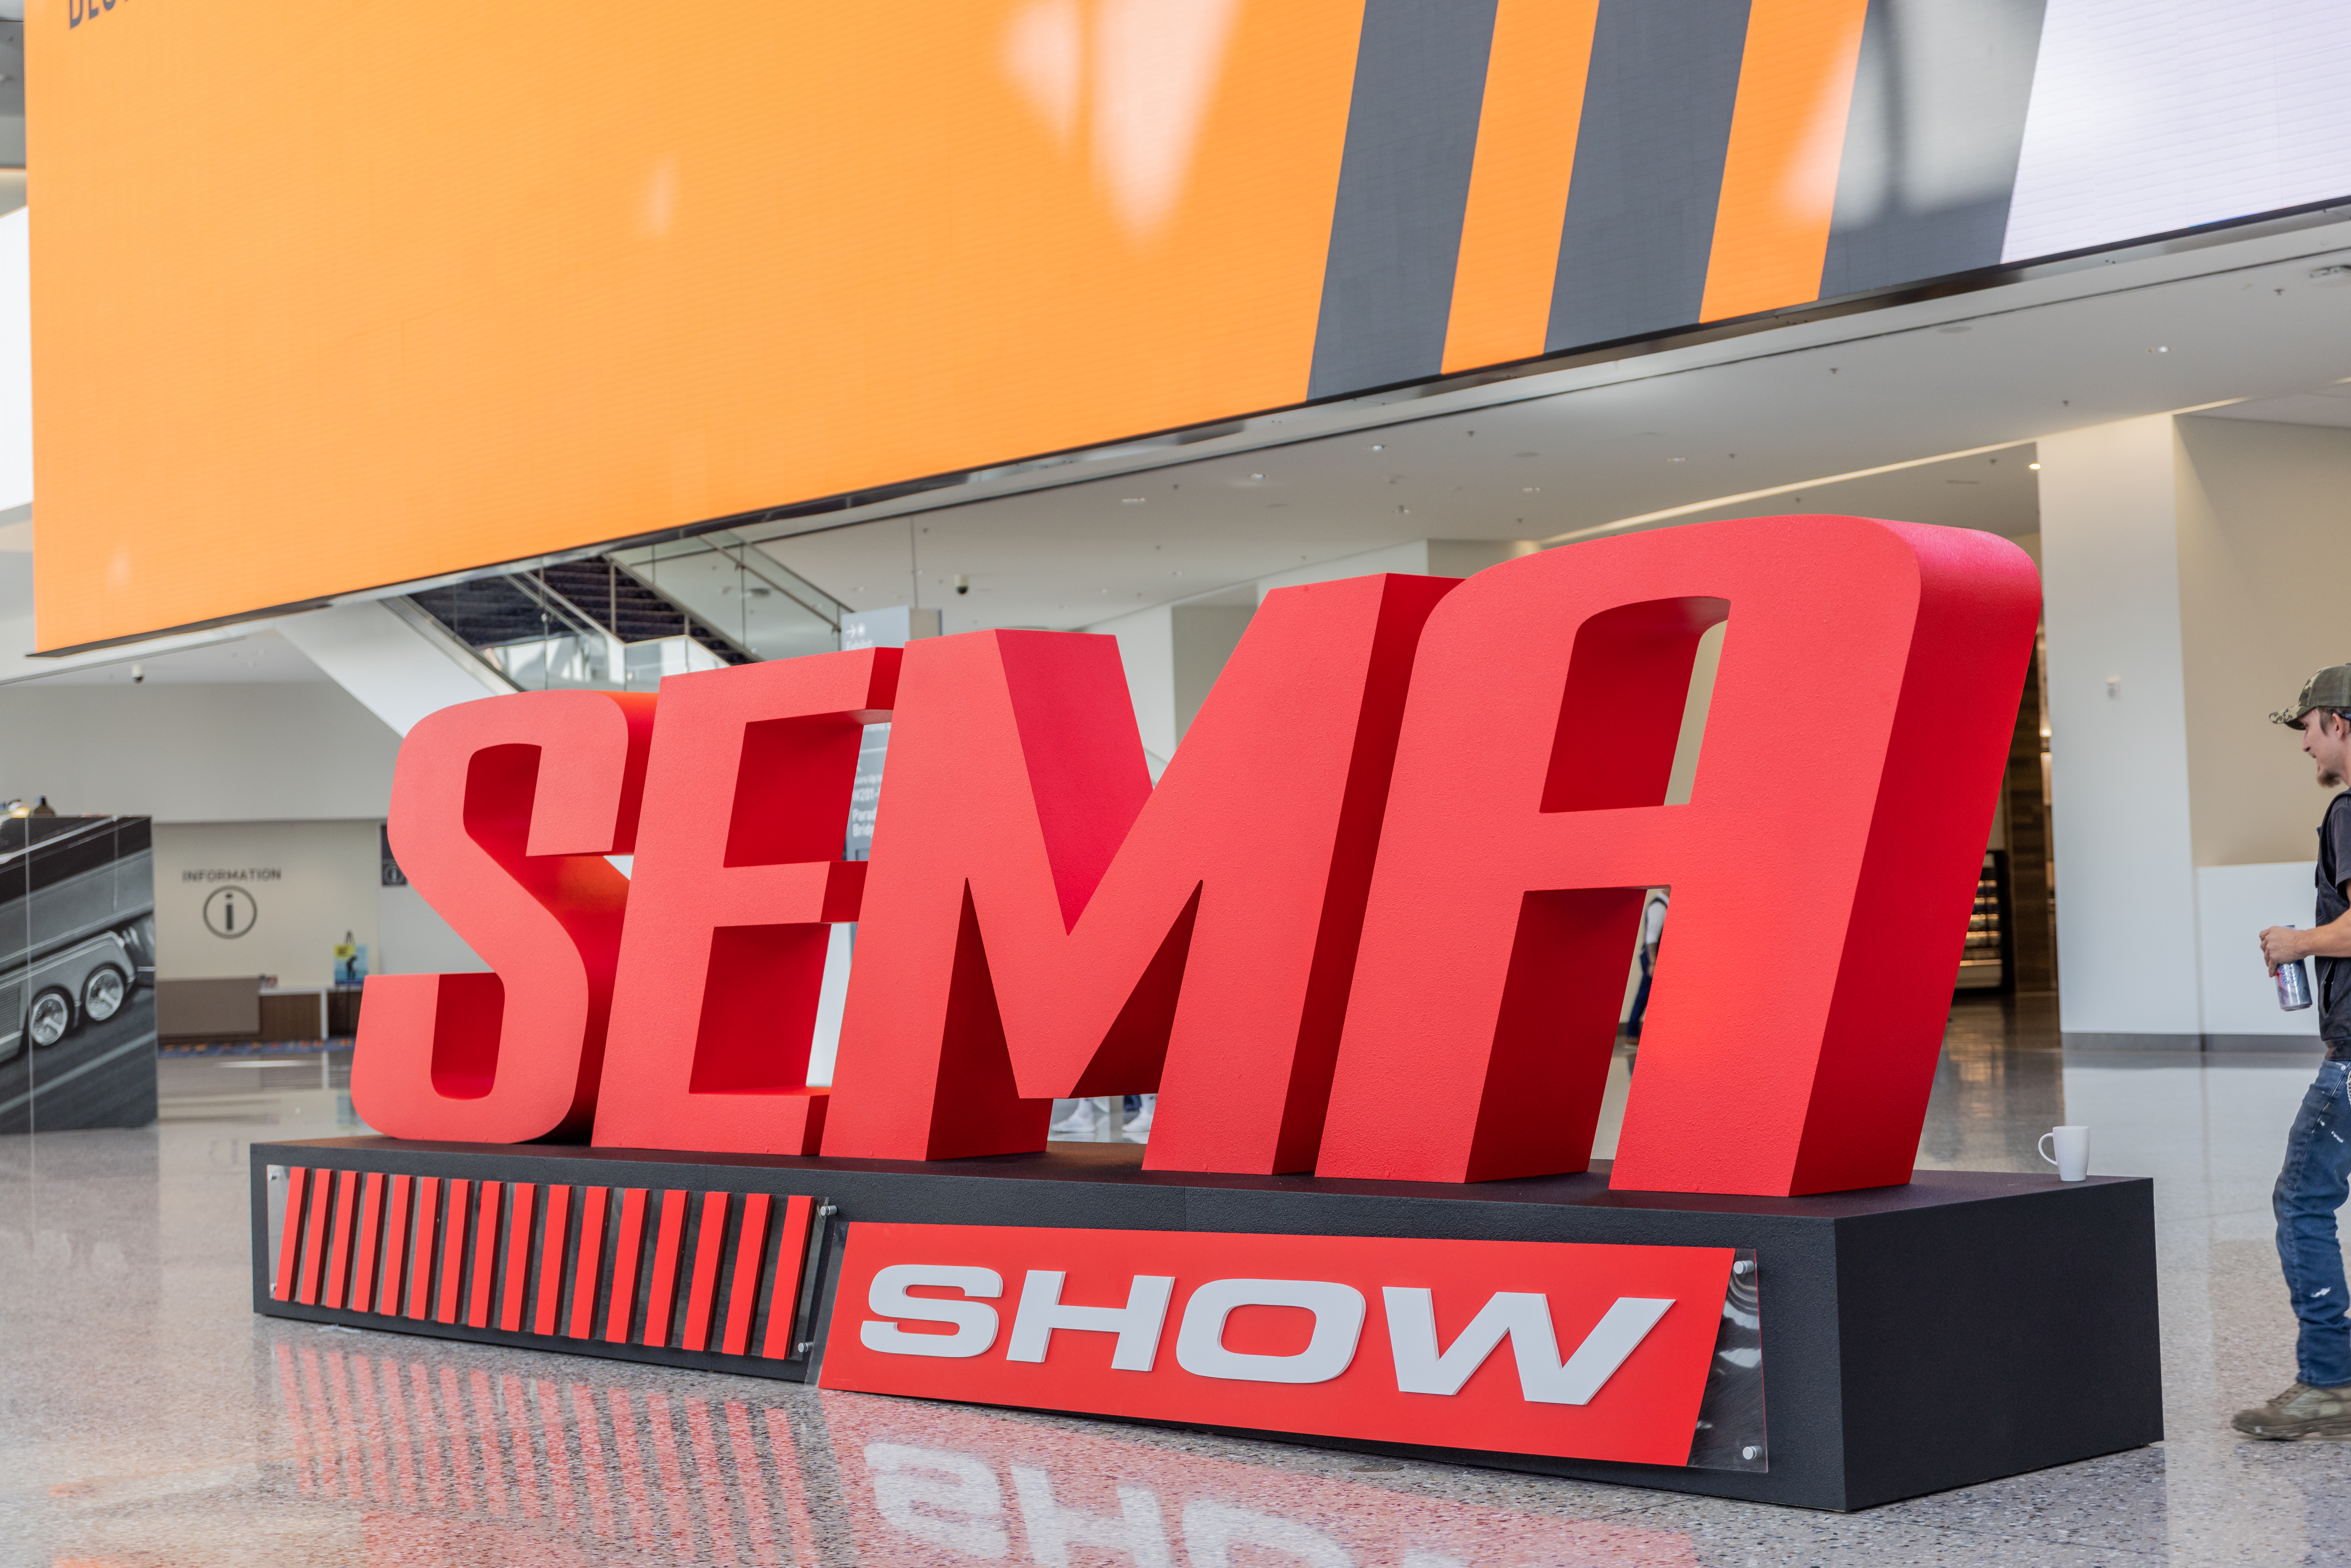 The SEMA Show